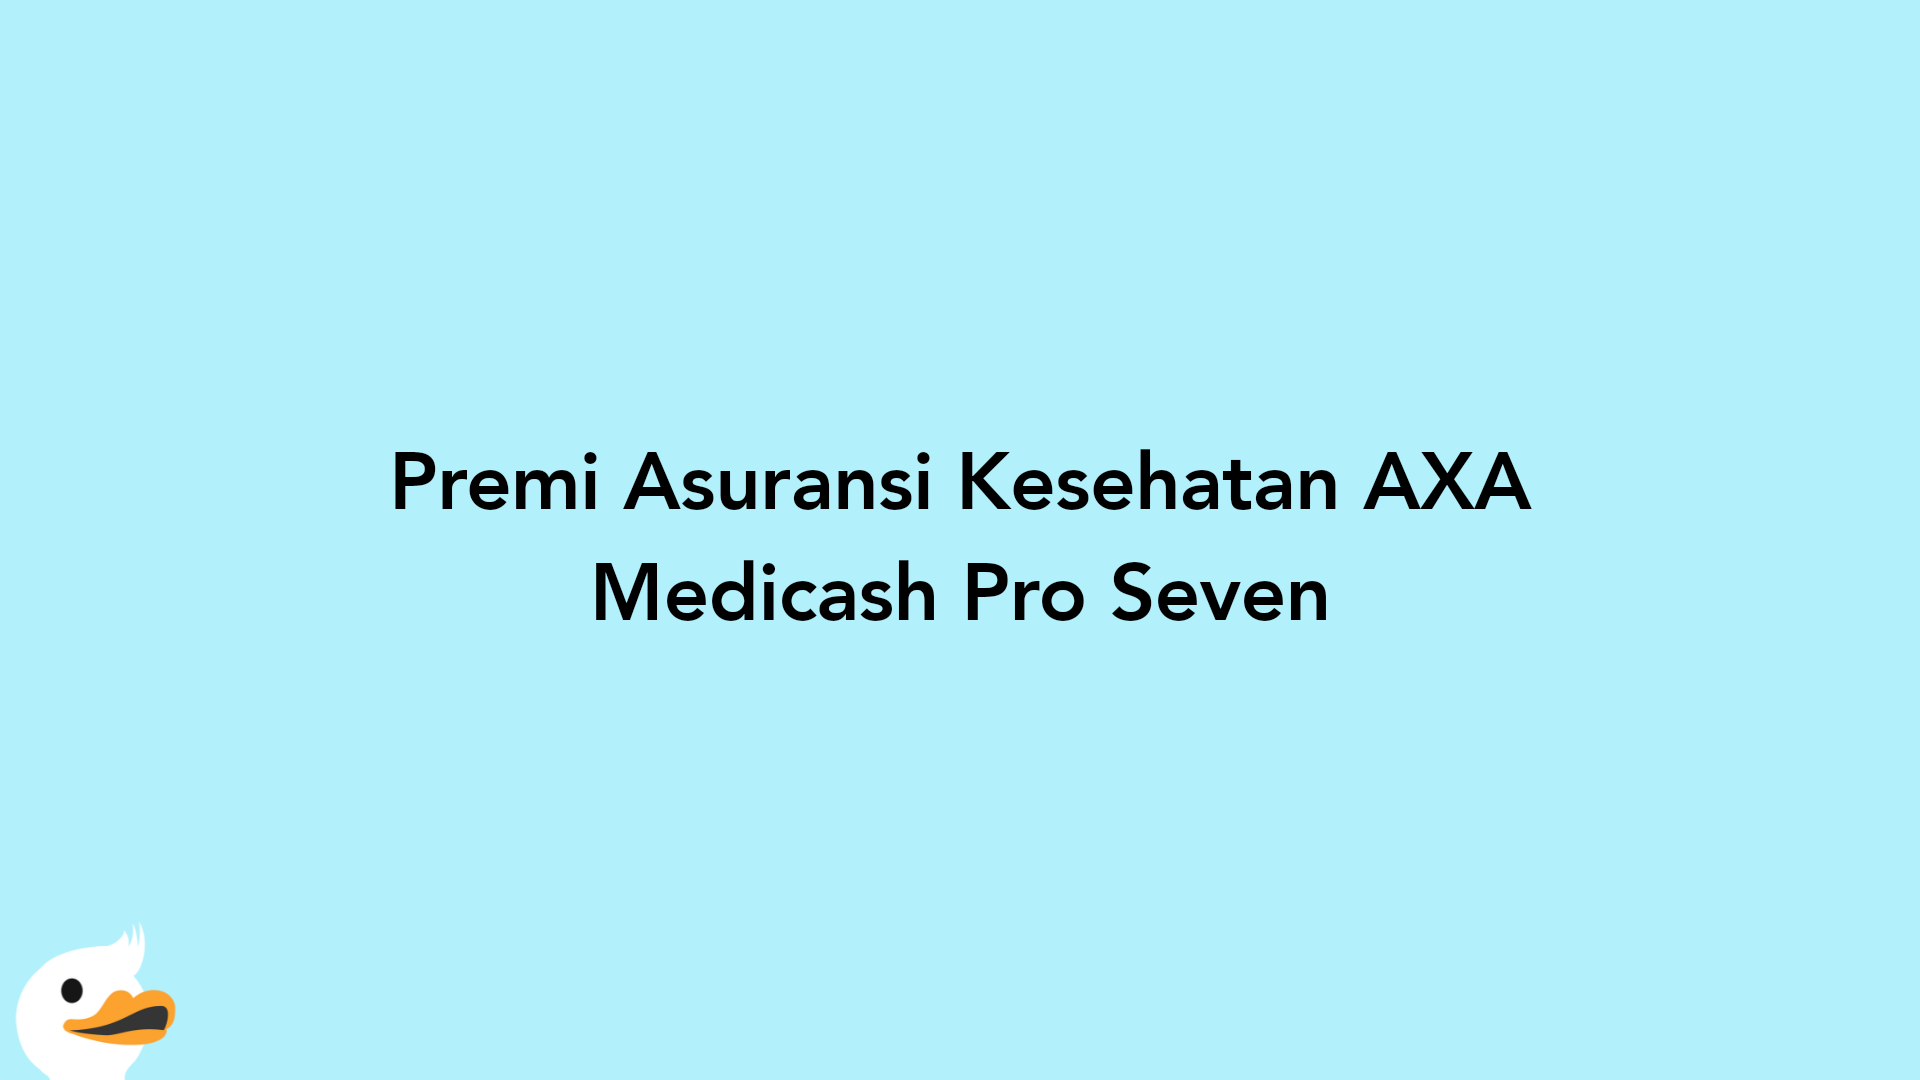 Premi Asuransi Kesehatan AXA Medicash Pro Seven